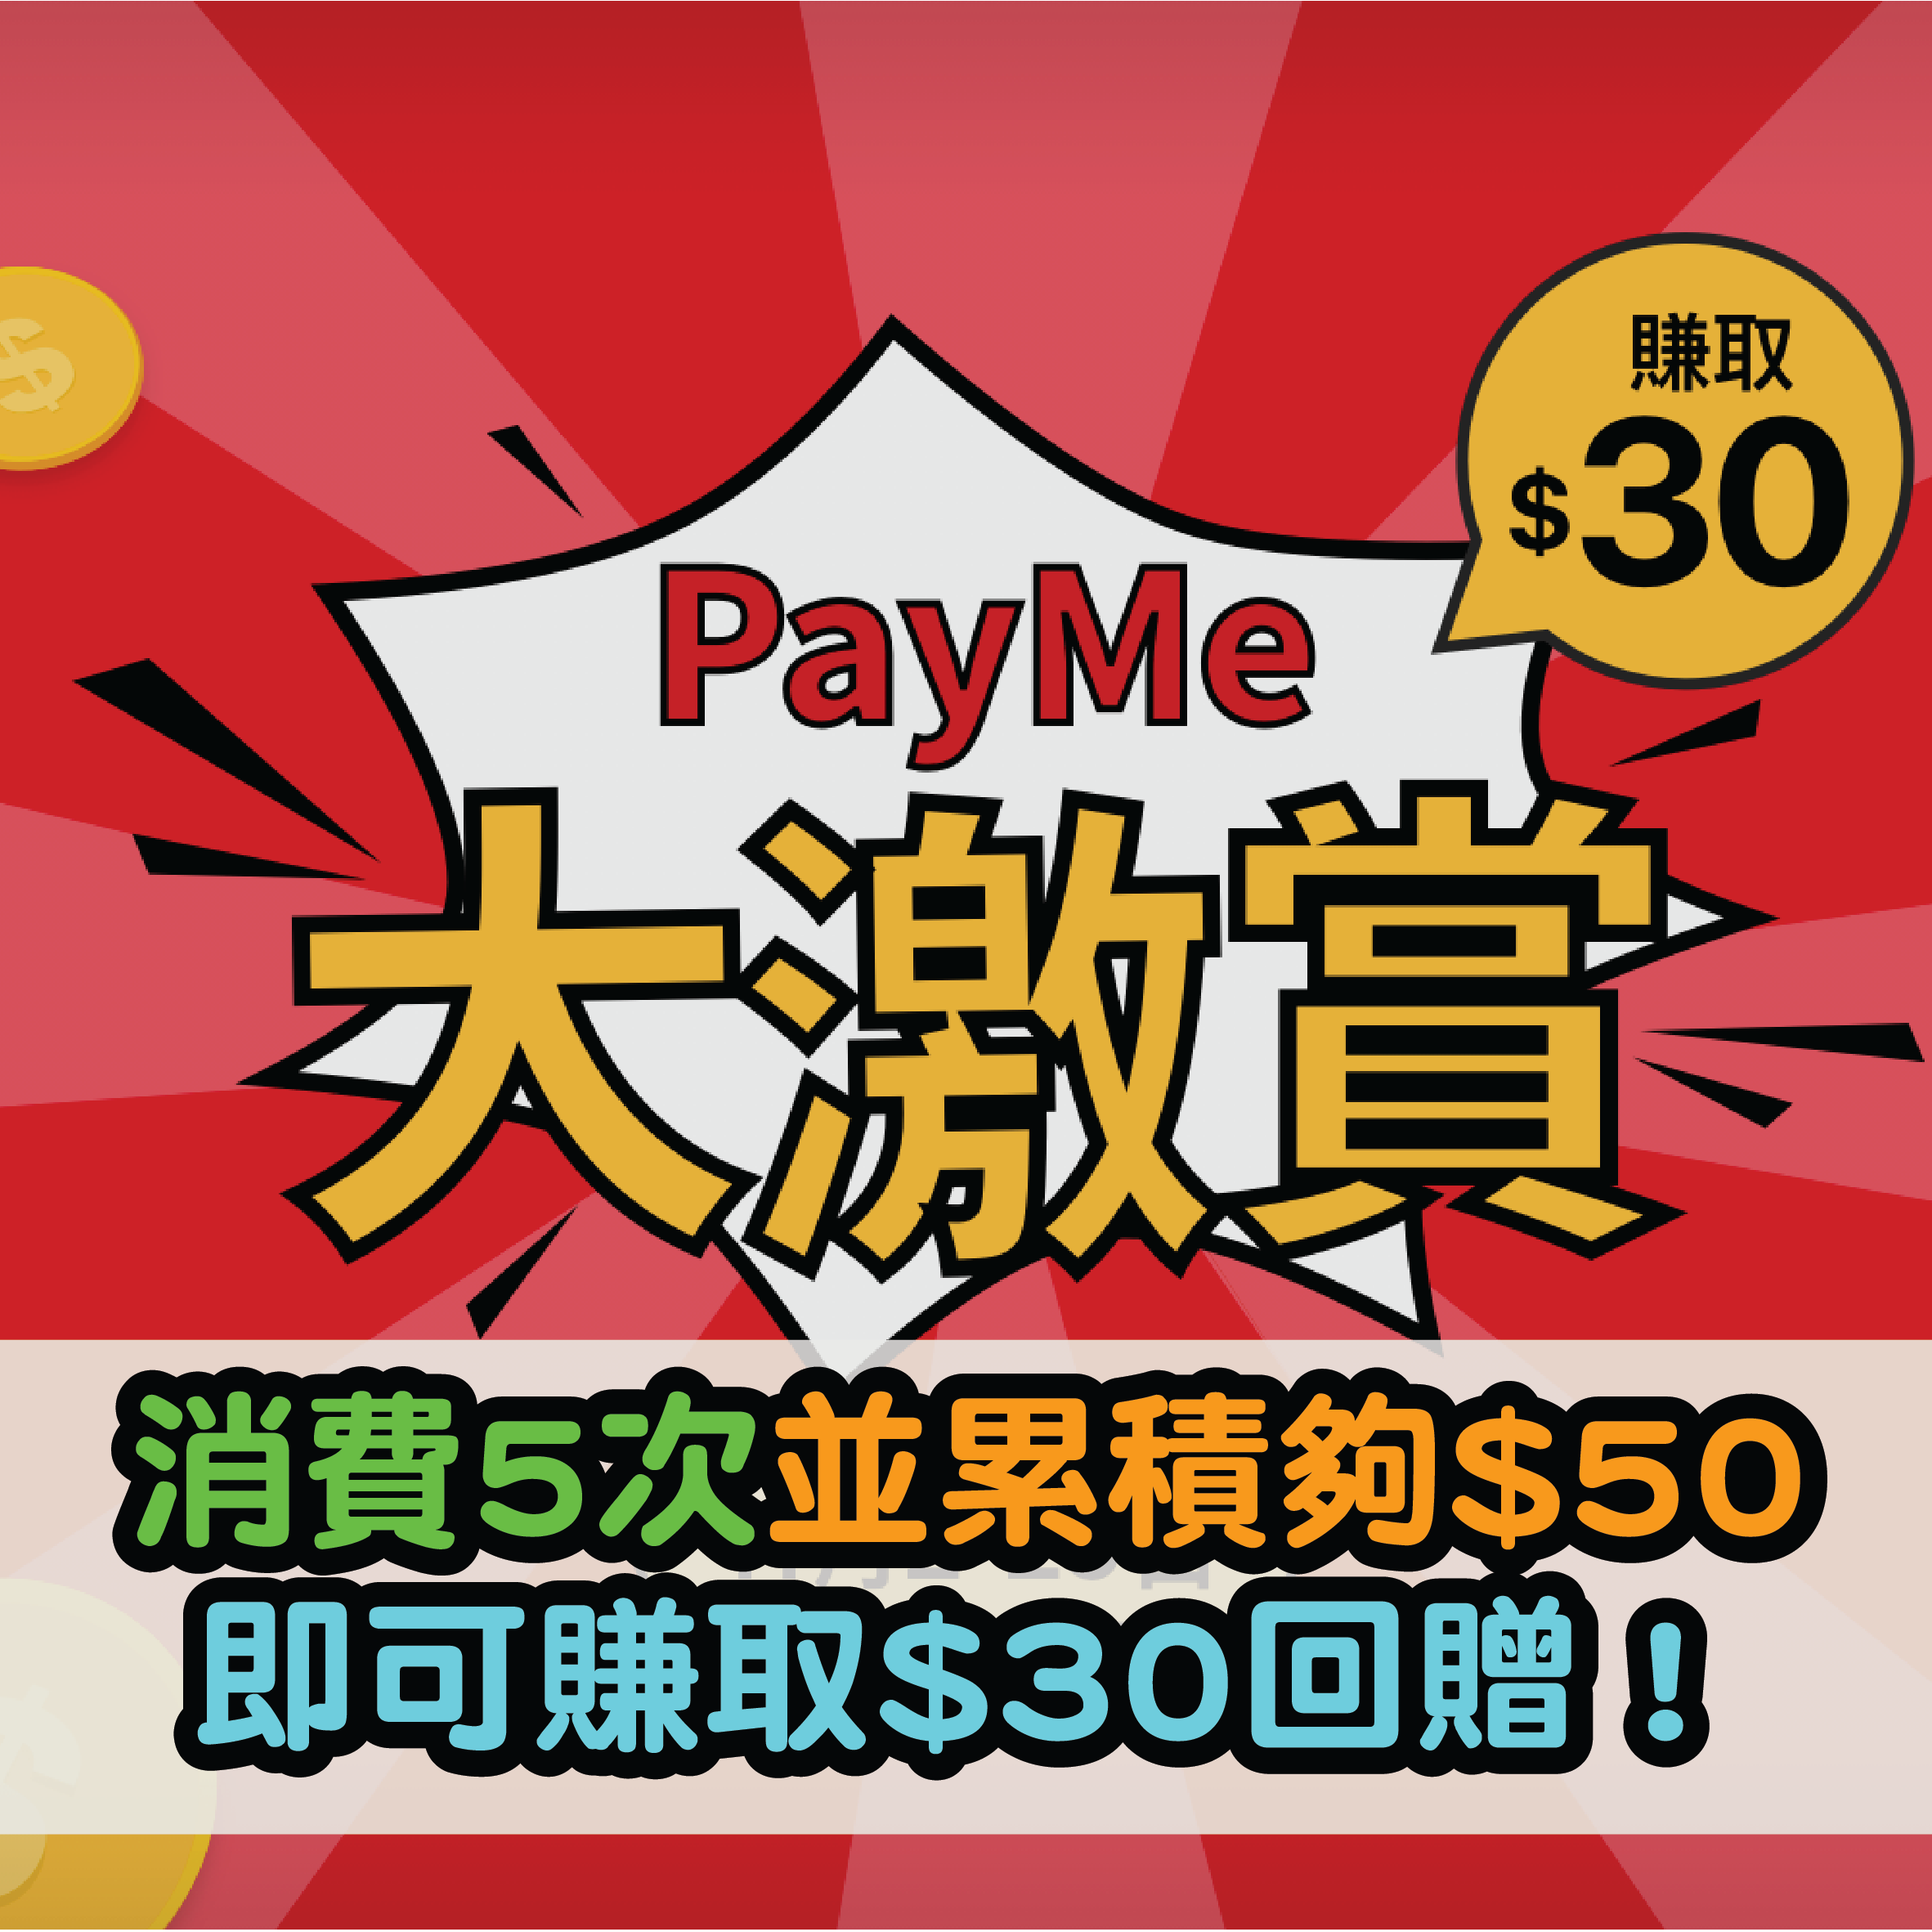 PayMe優惠！OK便利店優惠！單一簽賬$20即可扣$5！每日可用一次；於PayMe商店消費5次並每次夠$50，即可賺取$30回贈！